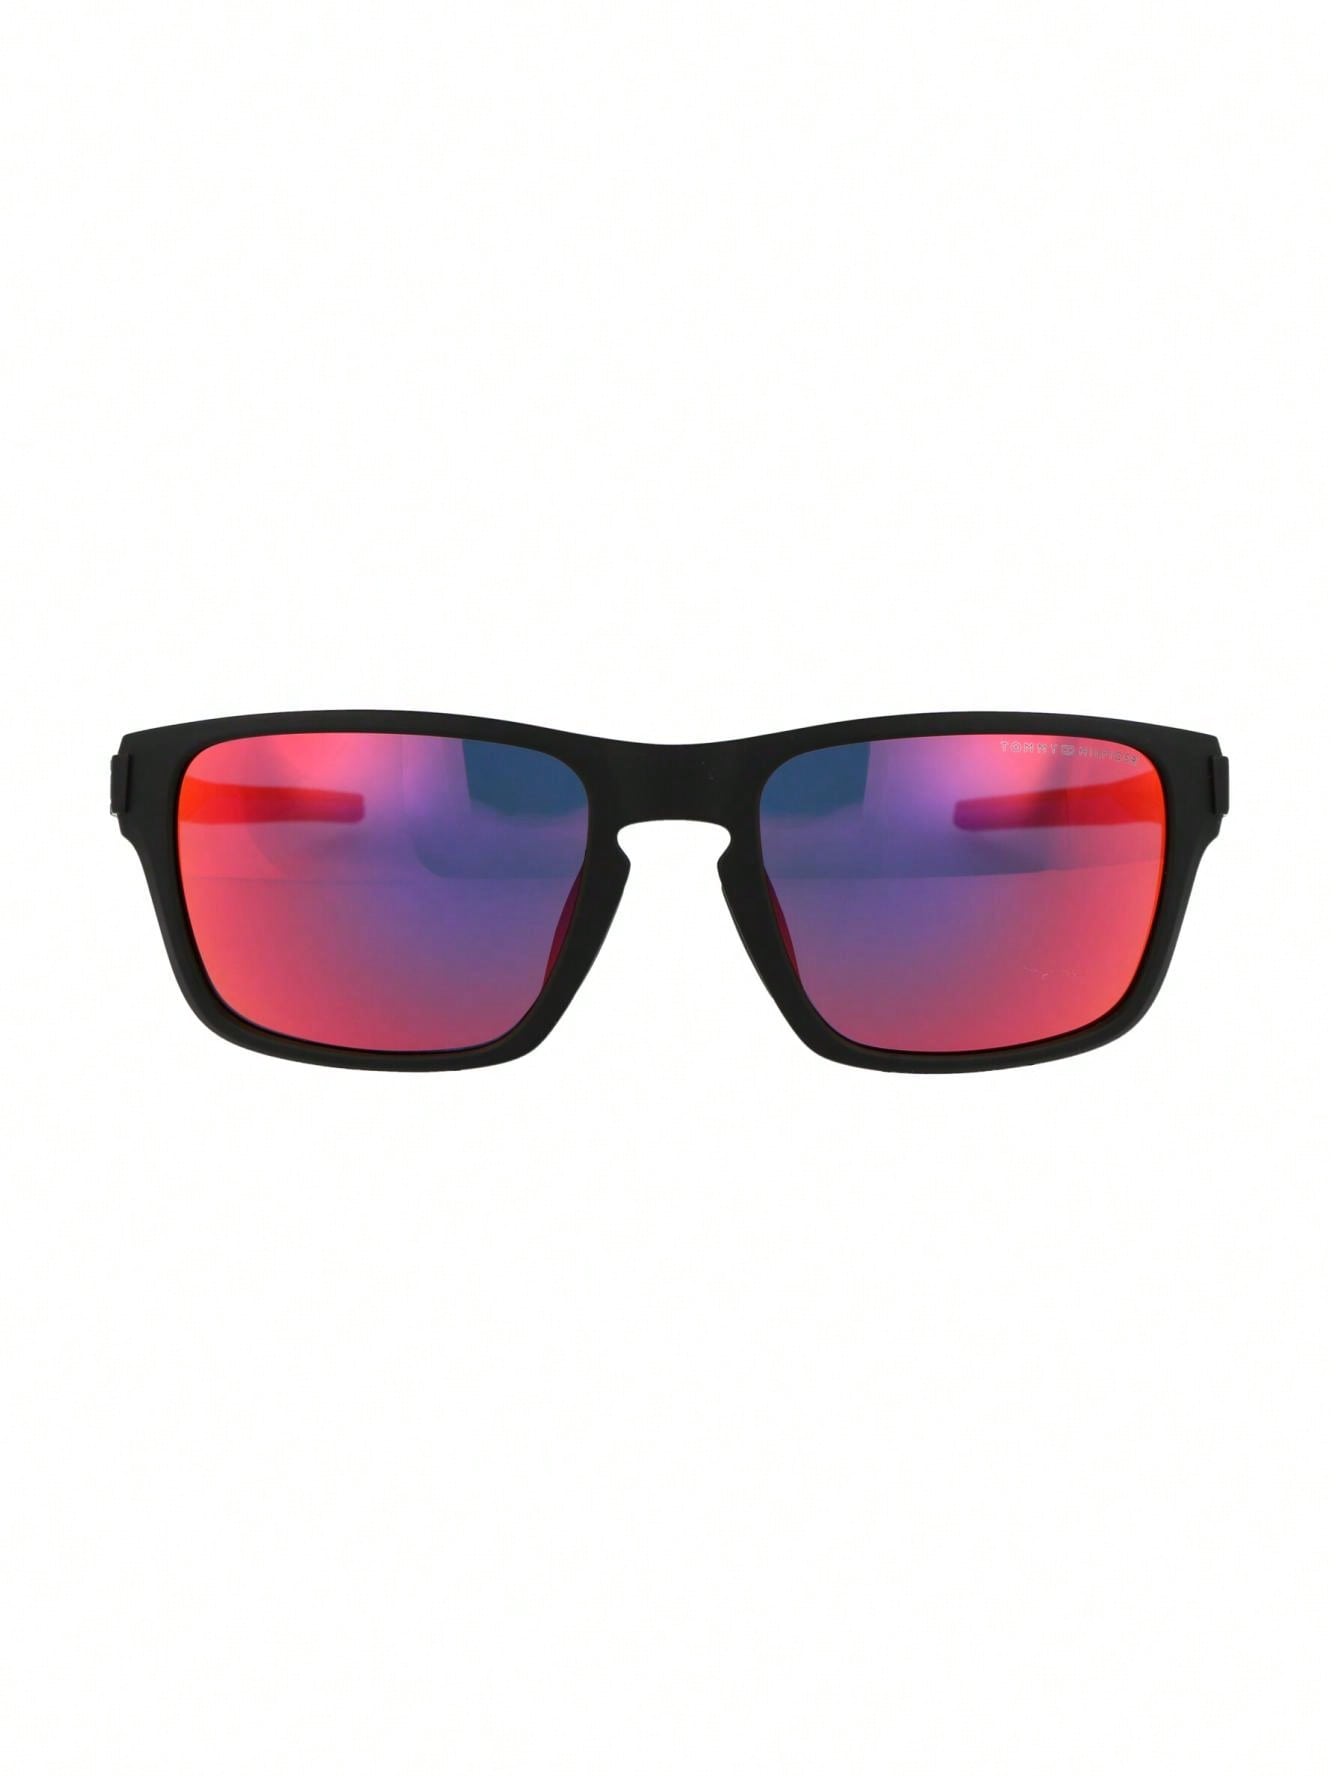 Мужские солнцезащитные очки Tommy Hilfiger DECOR TH1952S0VKPL, многоцветный мужские солнцезащитные очки tommy hilfiger decor th1952s0vkpl многоцветный